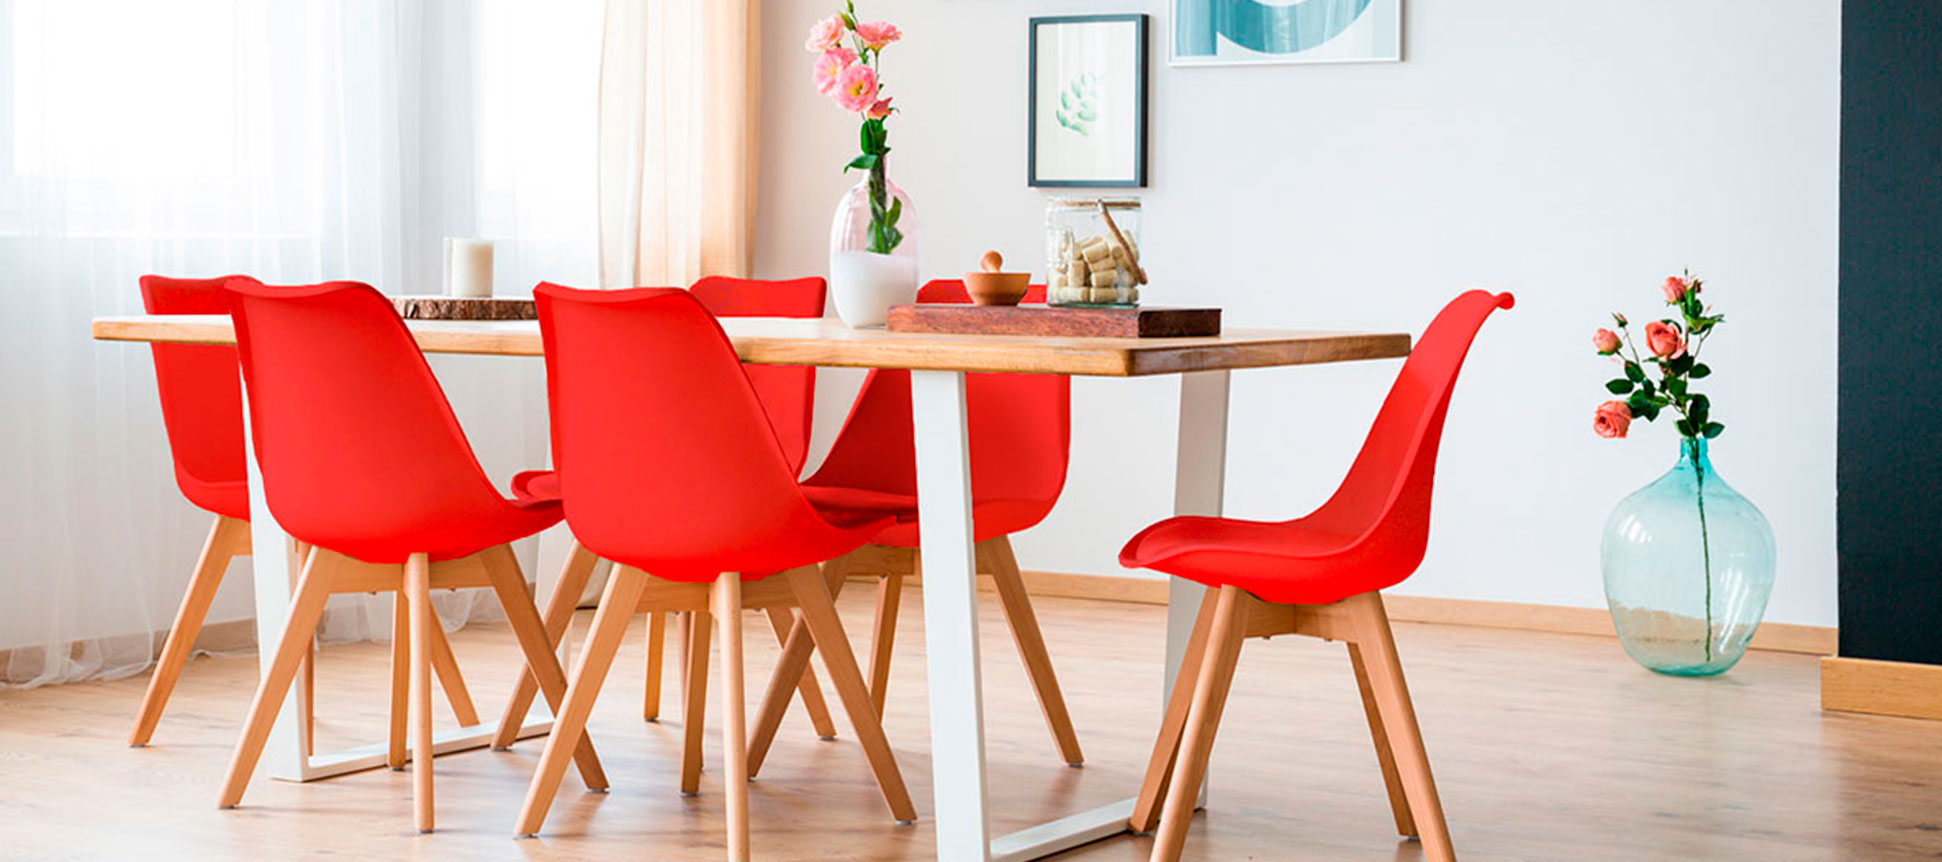 ¿Qué aporta un buen diseño de interiores a tu hogar?